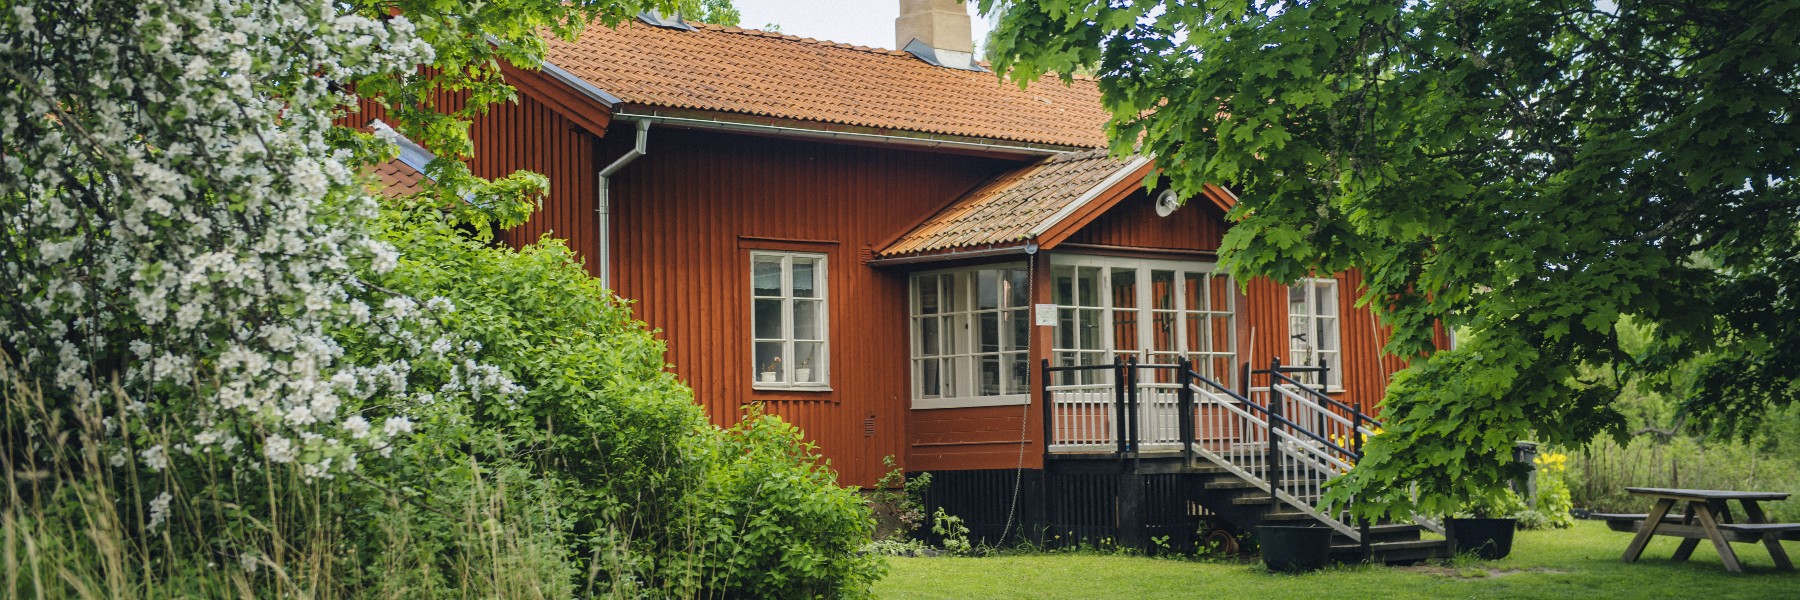 Nymansgården i Björskogsnäs naturreservat